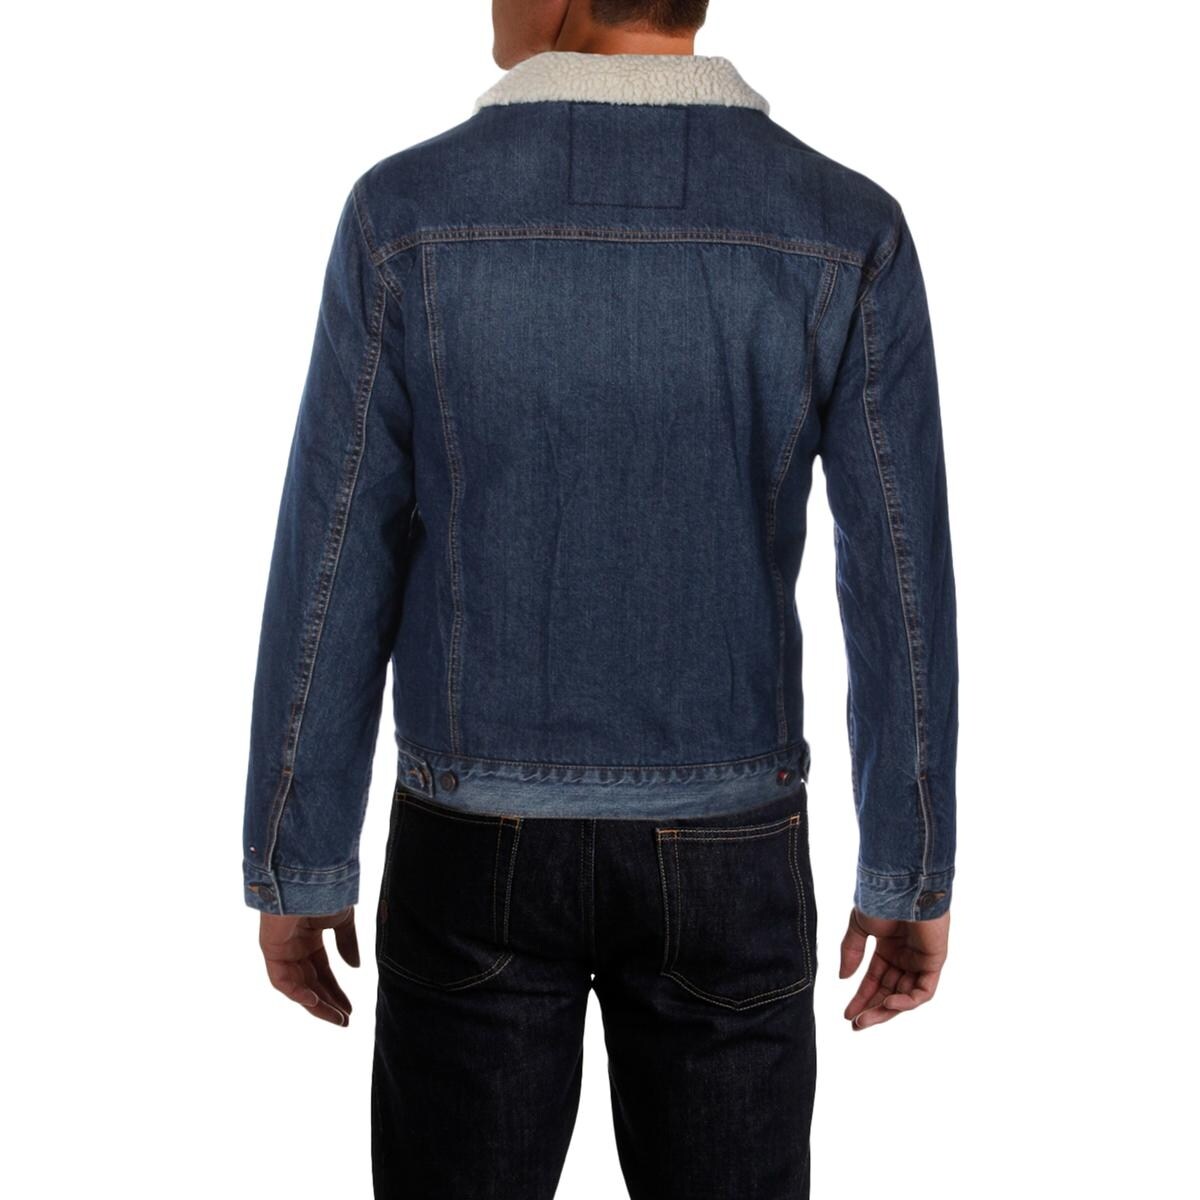 tommy hilfiger jean jacket with fur